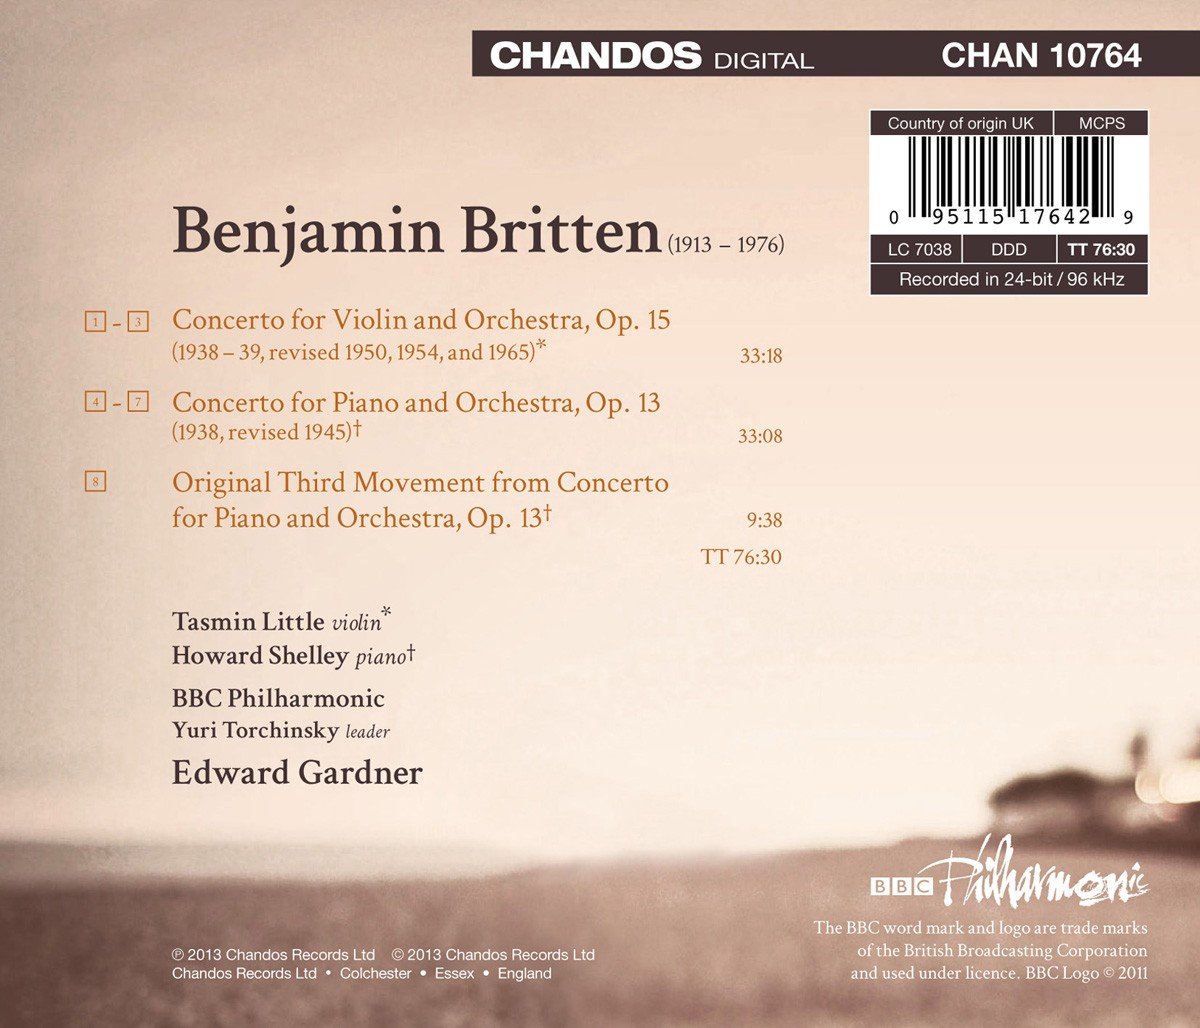 Edward Gardner 브리튼: 피아노 협주곡, 바이올린 협주곡 (Britten: Violin Concerto, Piano Concerto)